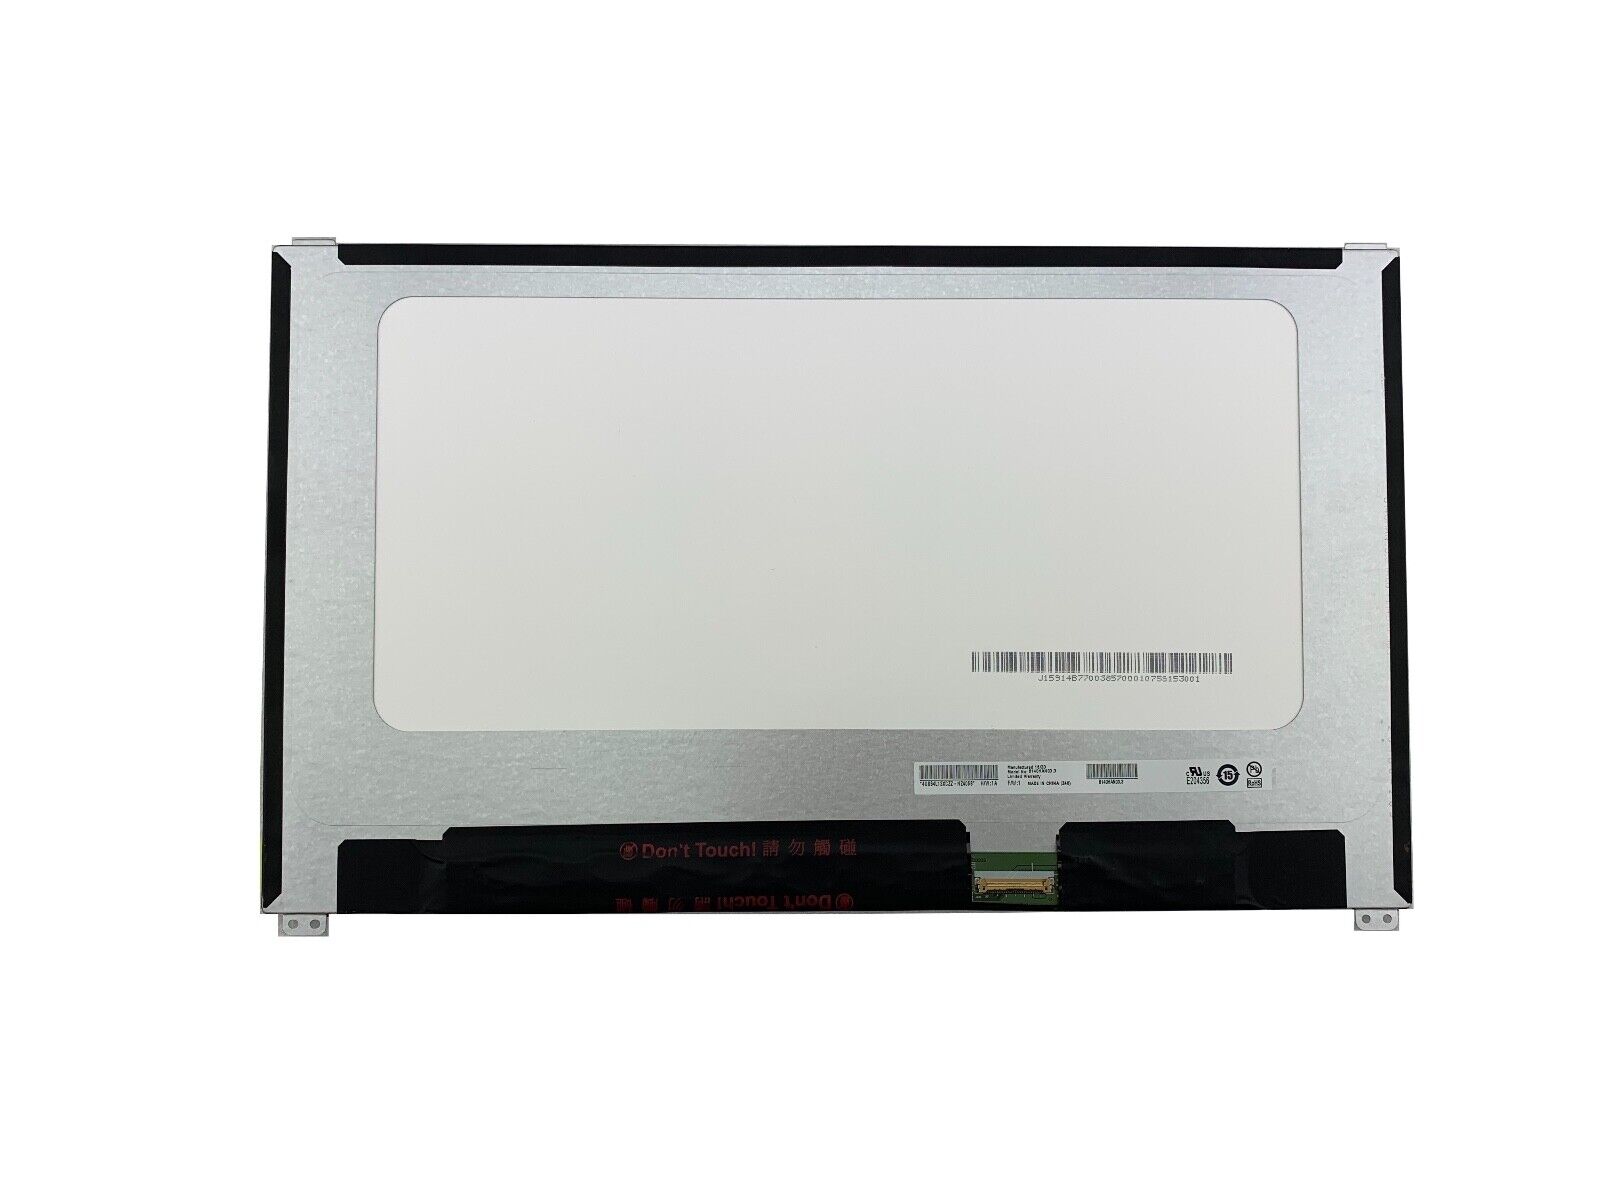 Dell PN DP/N 522V0 0522V0 IPS LCD Screen FHD 1920x1080 Matte TESTED WARRANTY